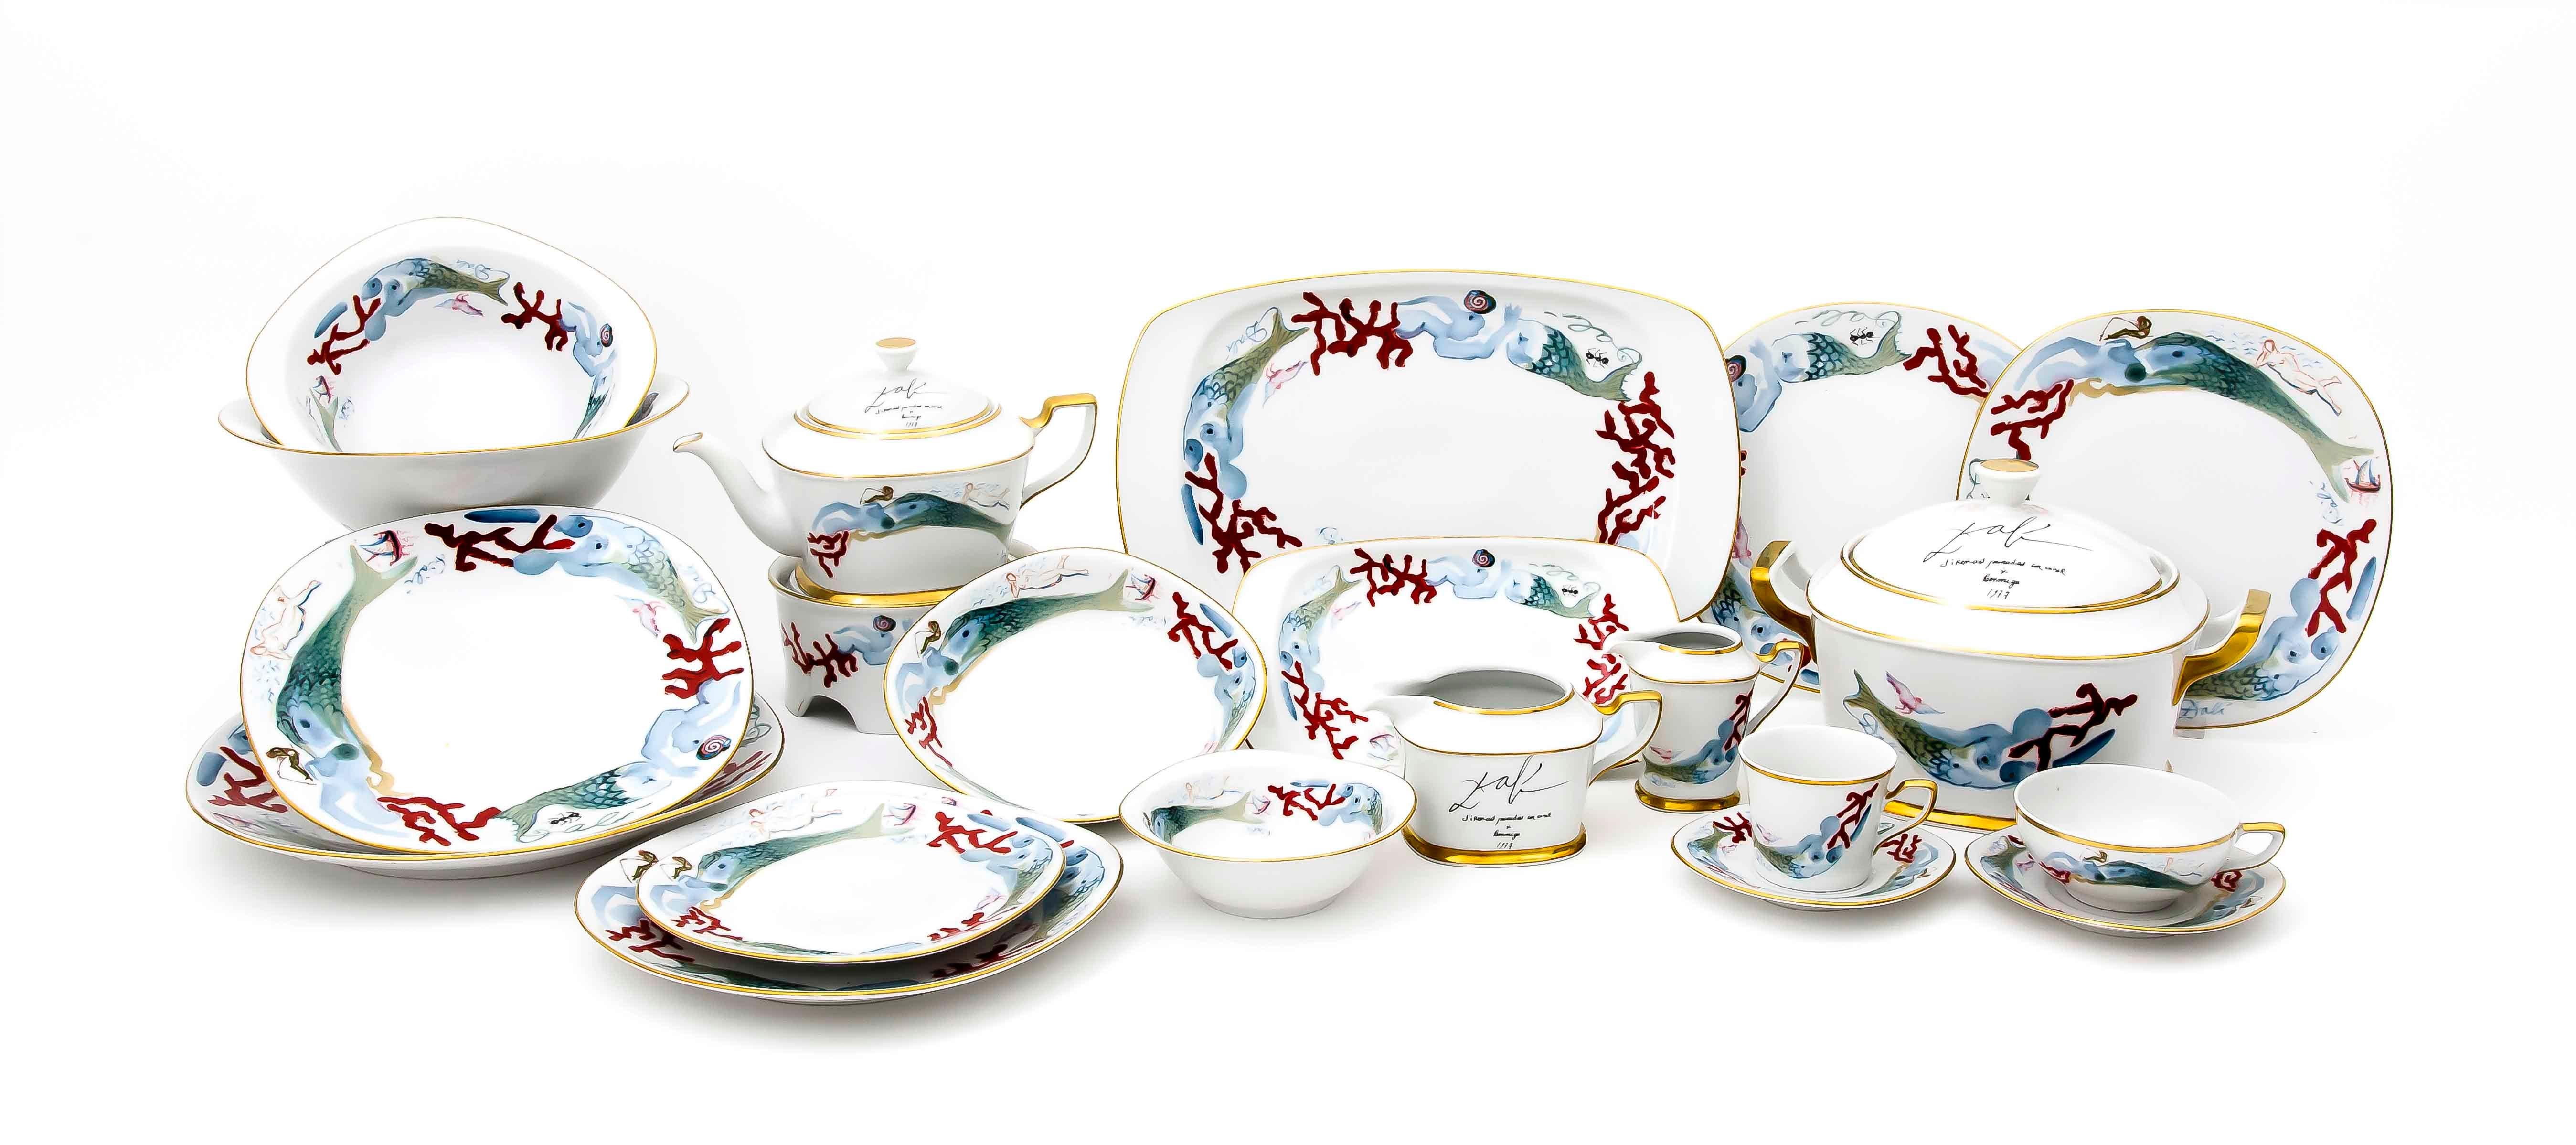 German Salvador Dali Service Porcelain over 100 pieces limited edition 1977 